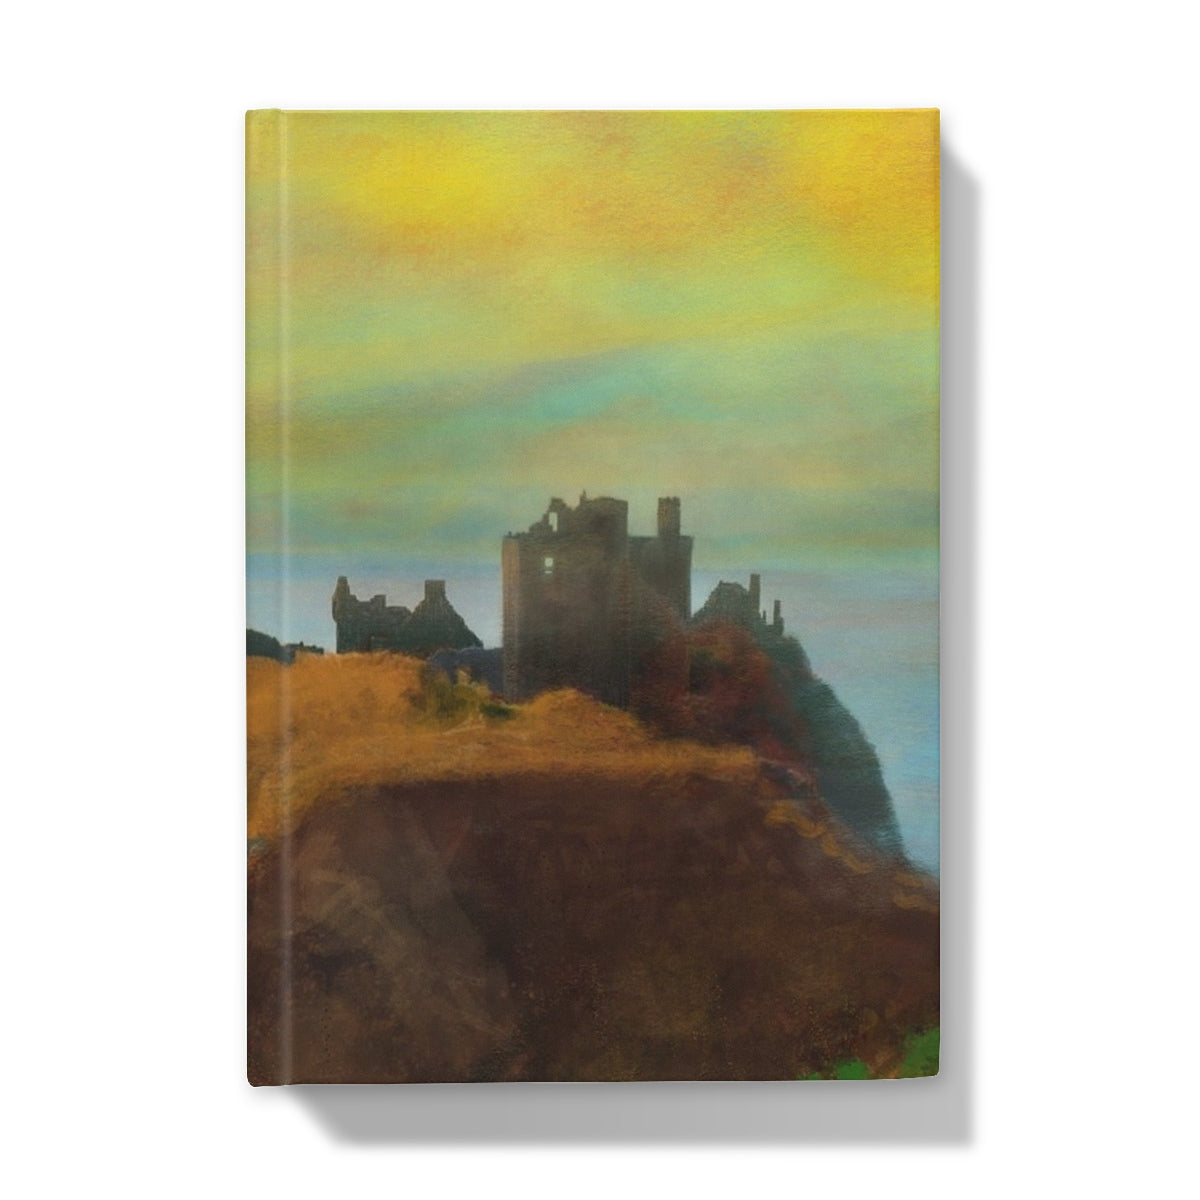 Dunnottar Castle Art Gifts Hardback Journal-Journals & Notebooks-Historic & Iconic Scotland Art Gallery-5"x7"-Plain-Paintings, Prints, Homeware, Art Gifts From Scotland By Scottish Artist Kevin Hunter